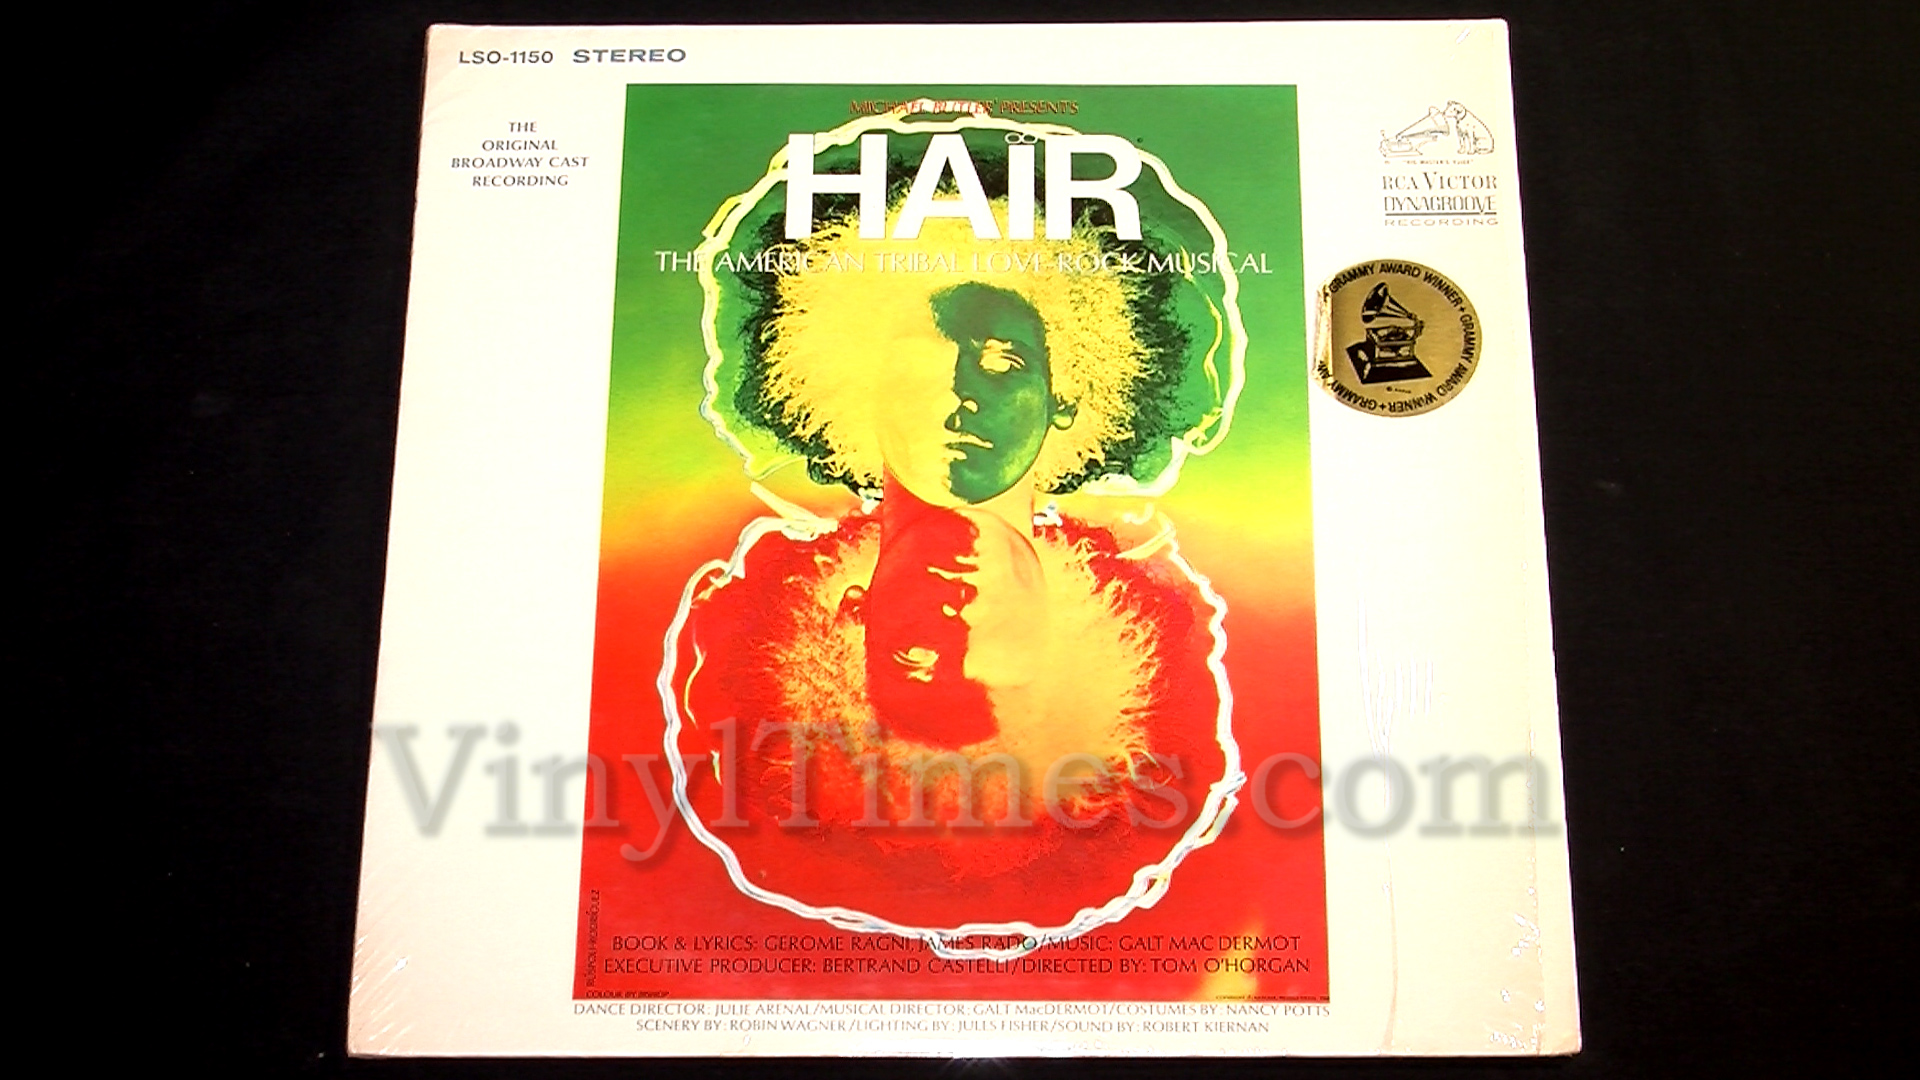 Broadway - "Hair" Vinyl LP Record Album